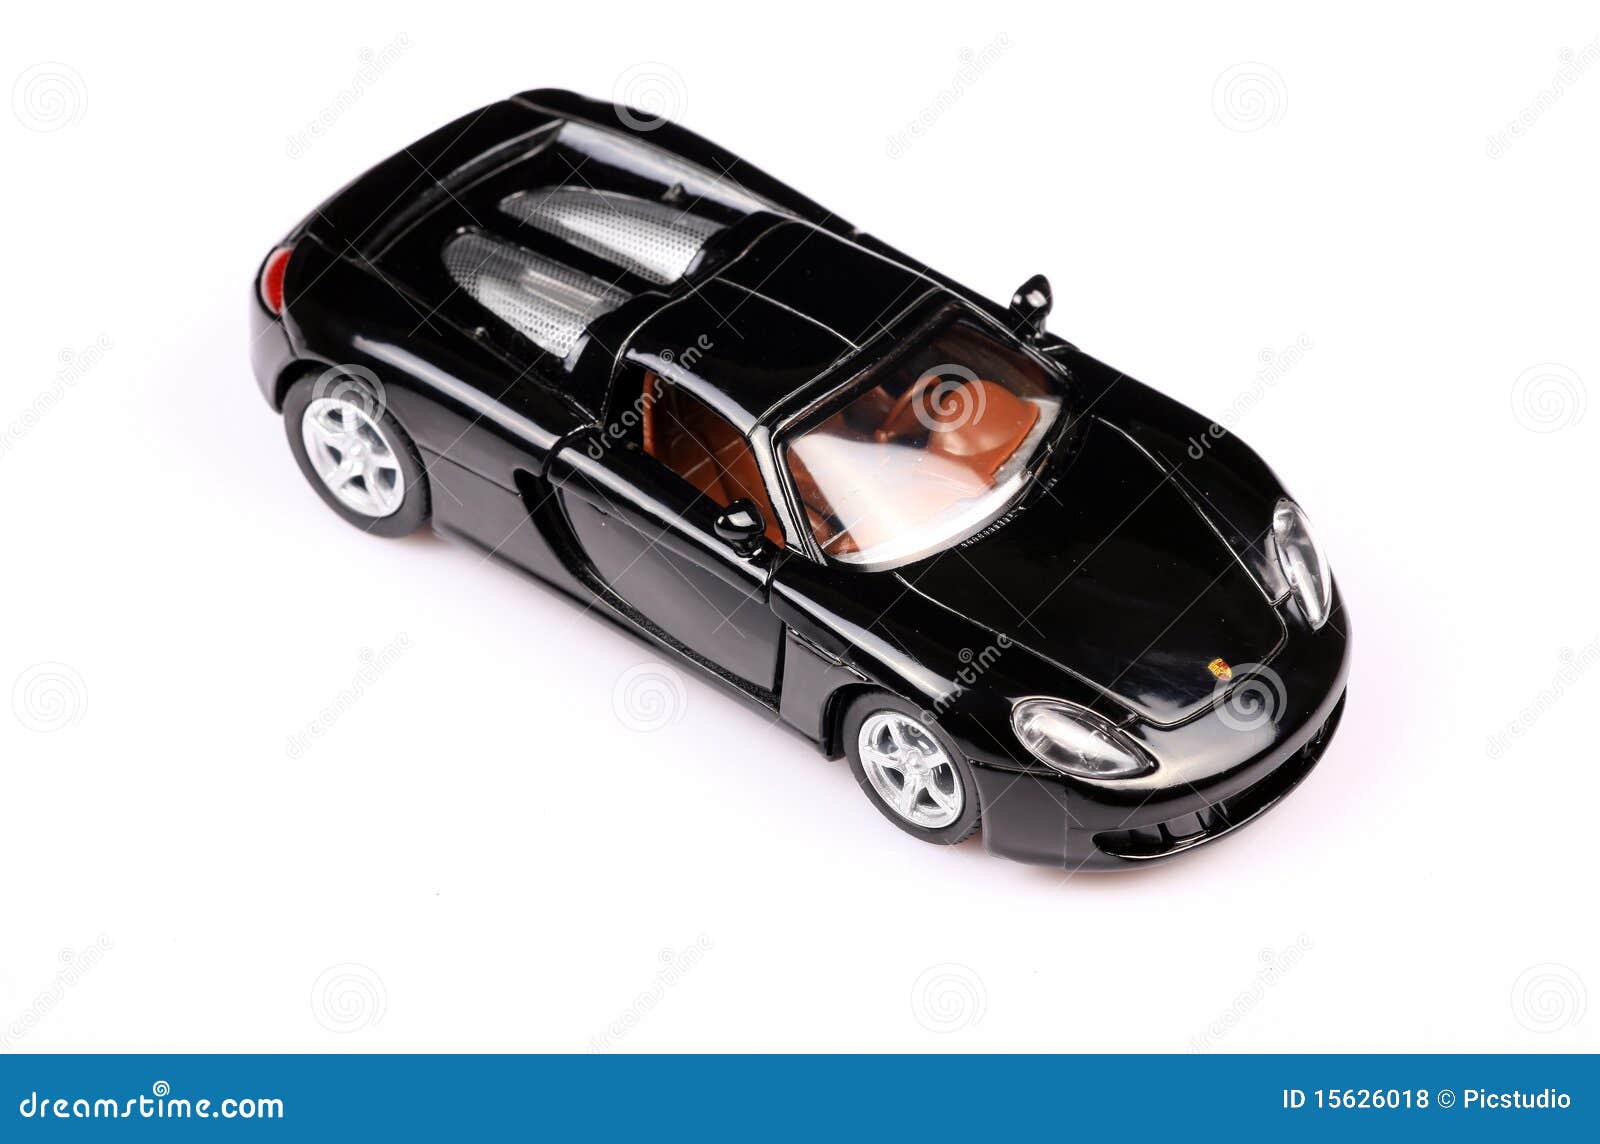 Porsche carrera gt editorial stock photo. Image of background - 15626018